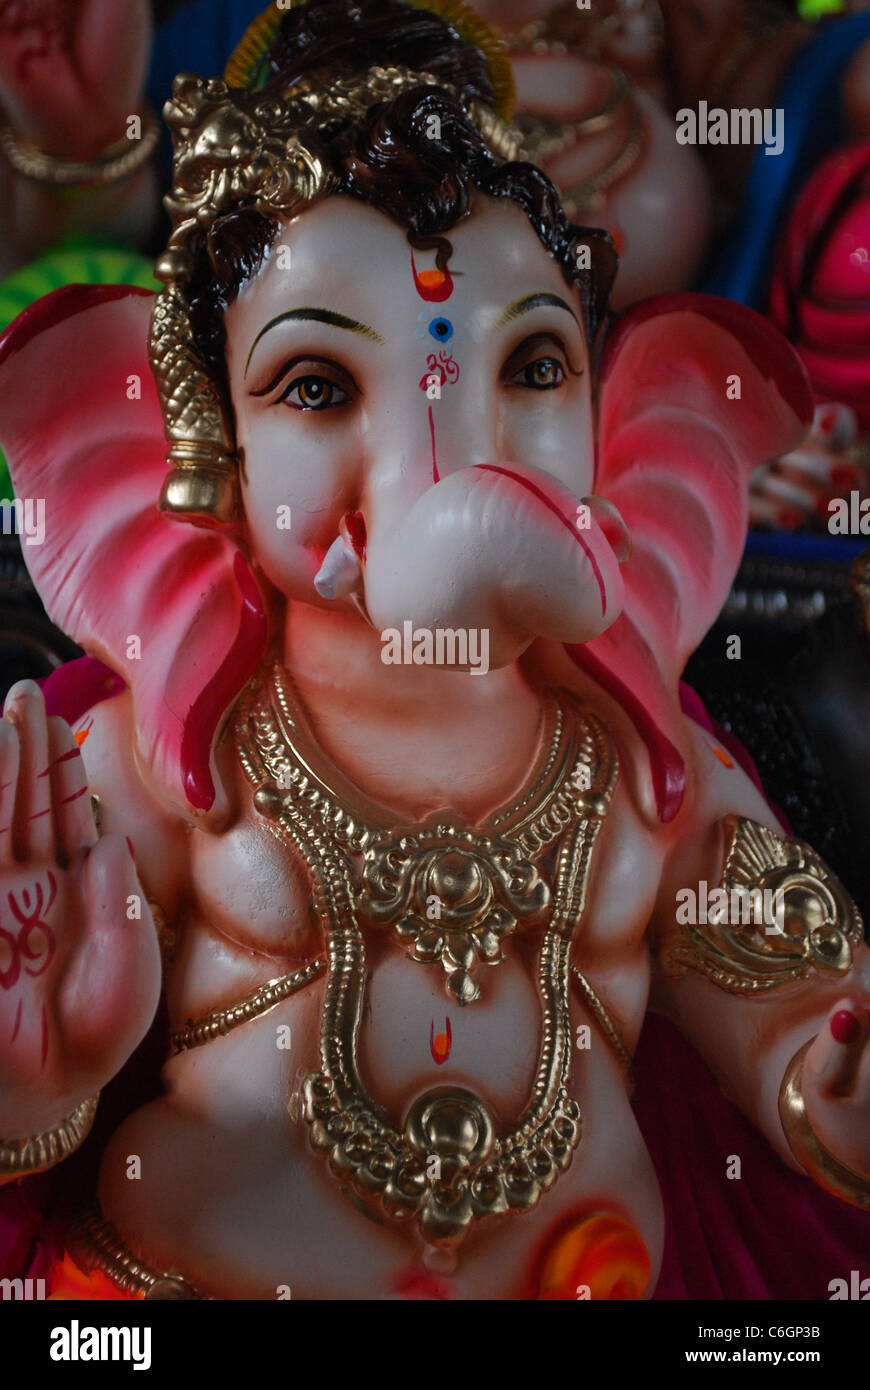 Goddess Ganpati High Resolution Stock Photography and Images - Alamy